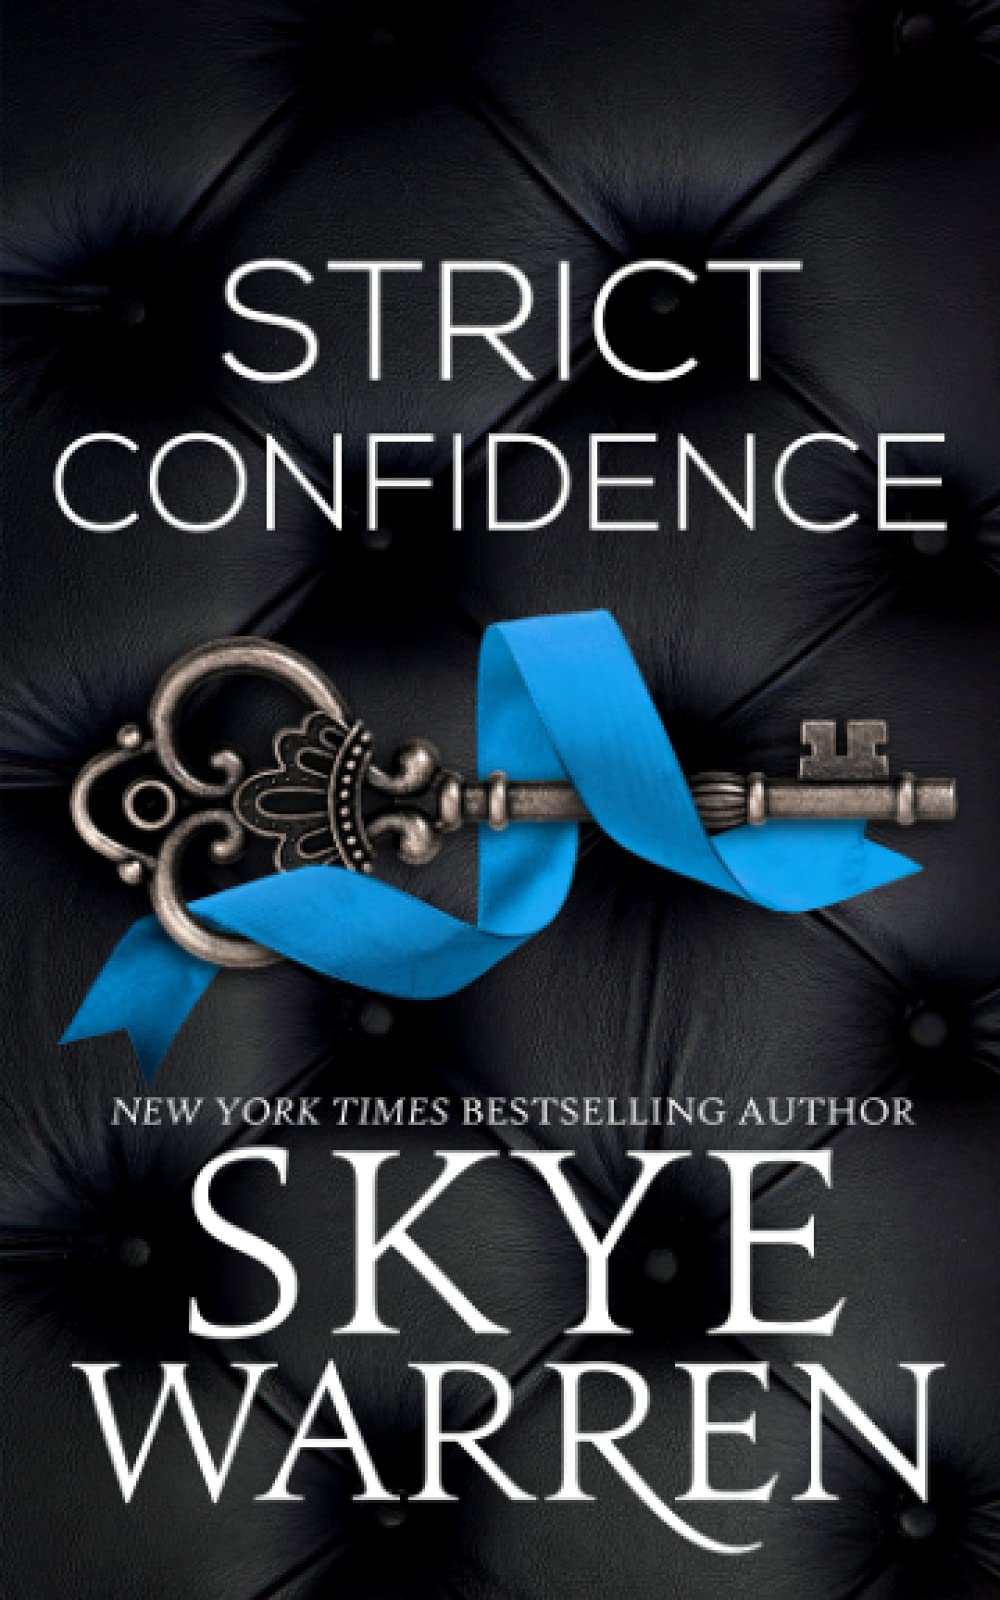 [EPUB] Rochester Trilogy #2 Strict Confidence by Skye Warren